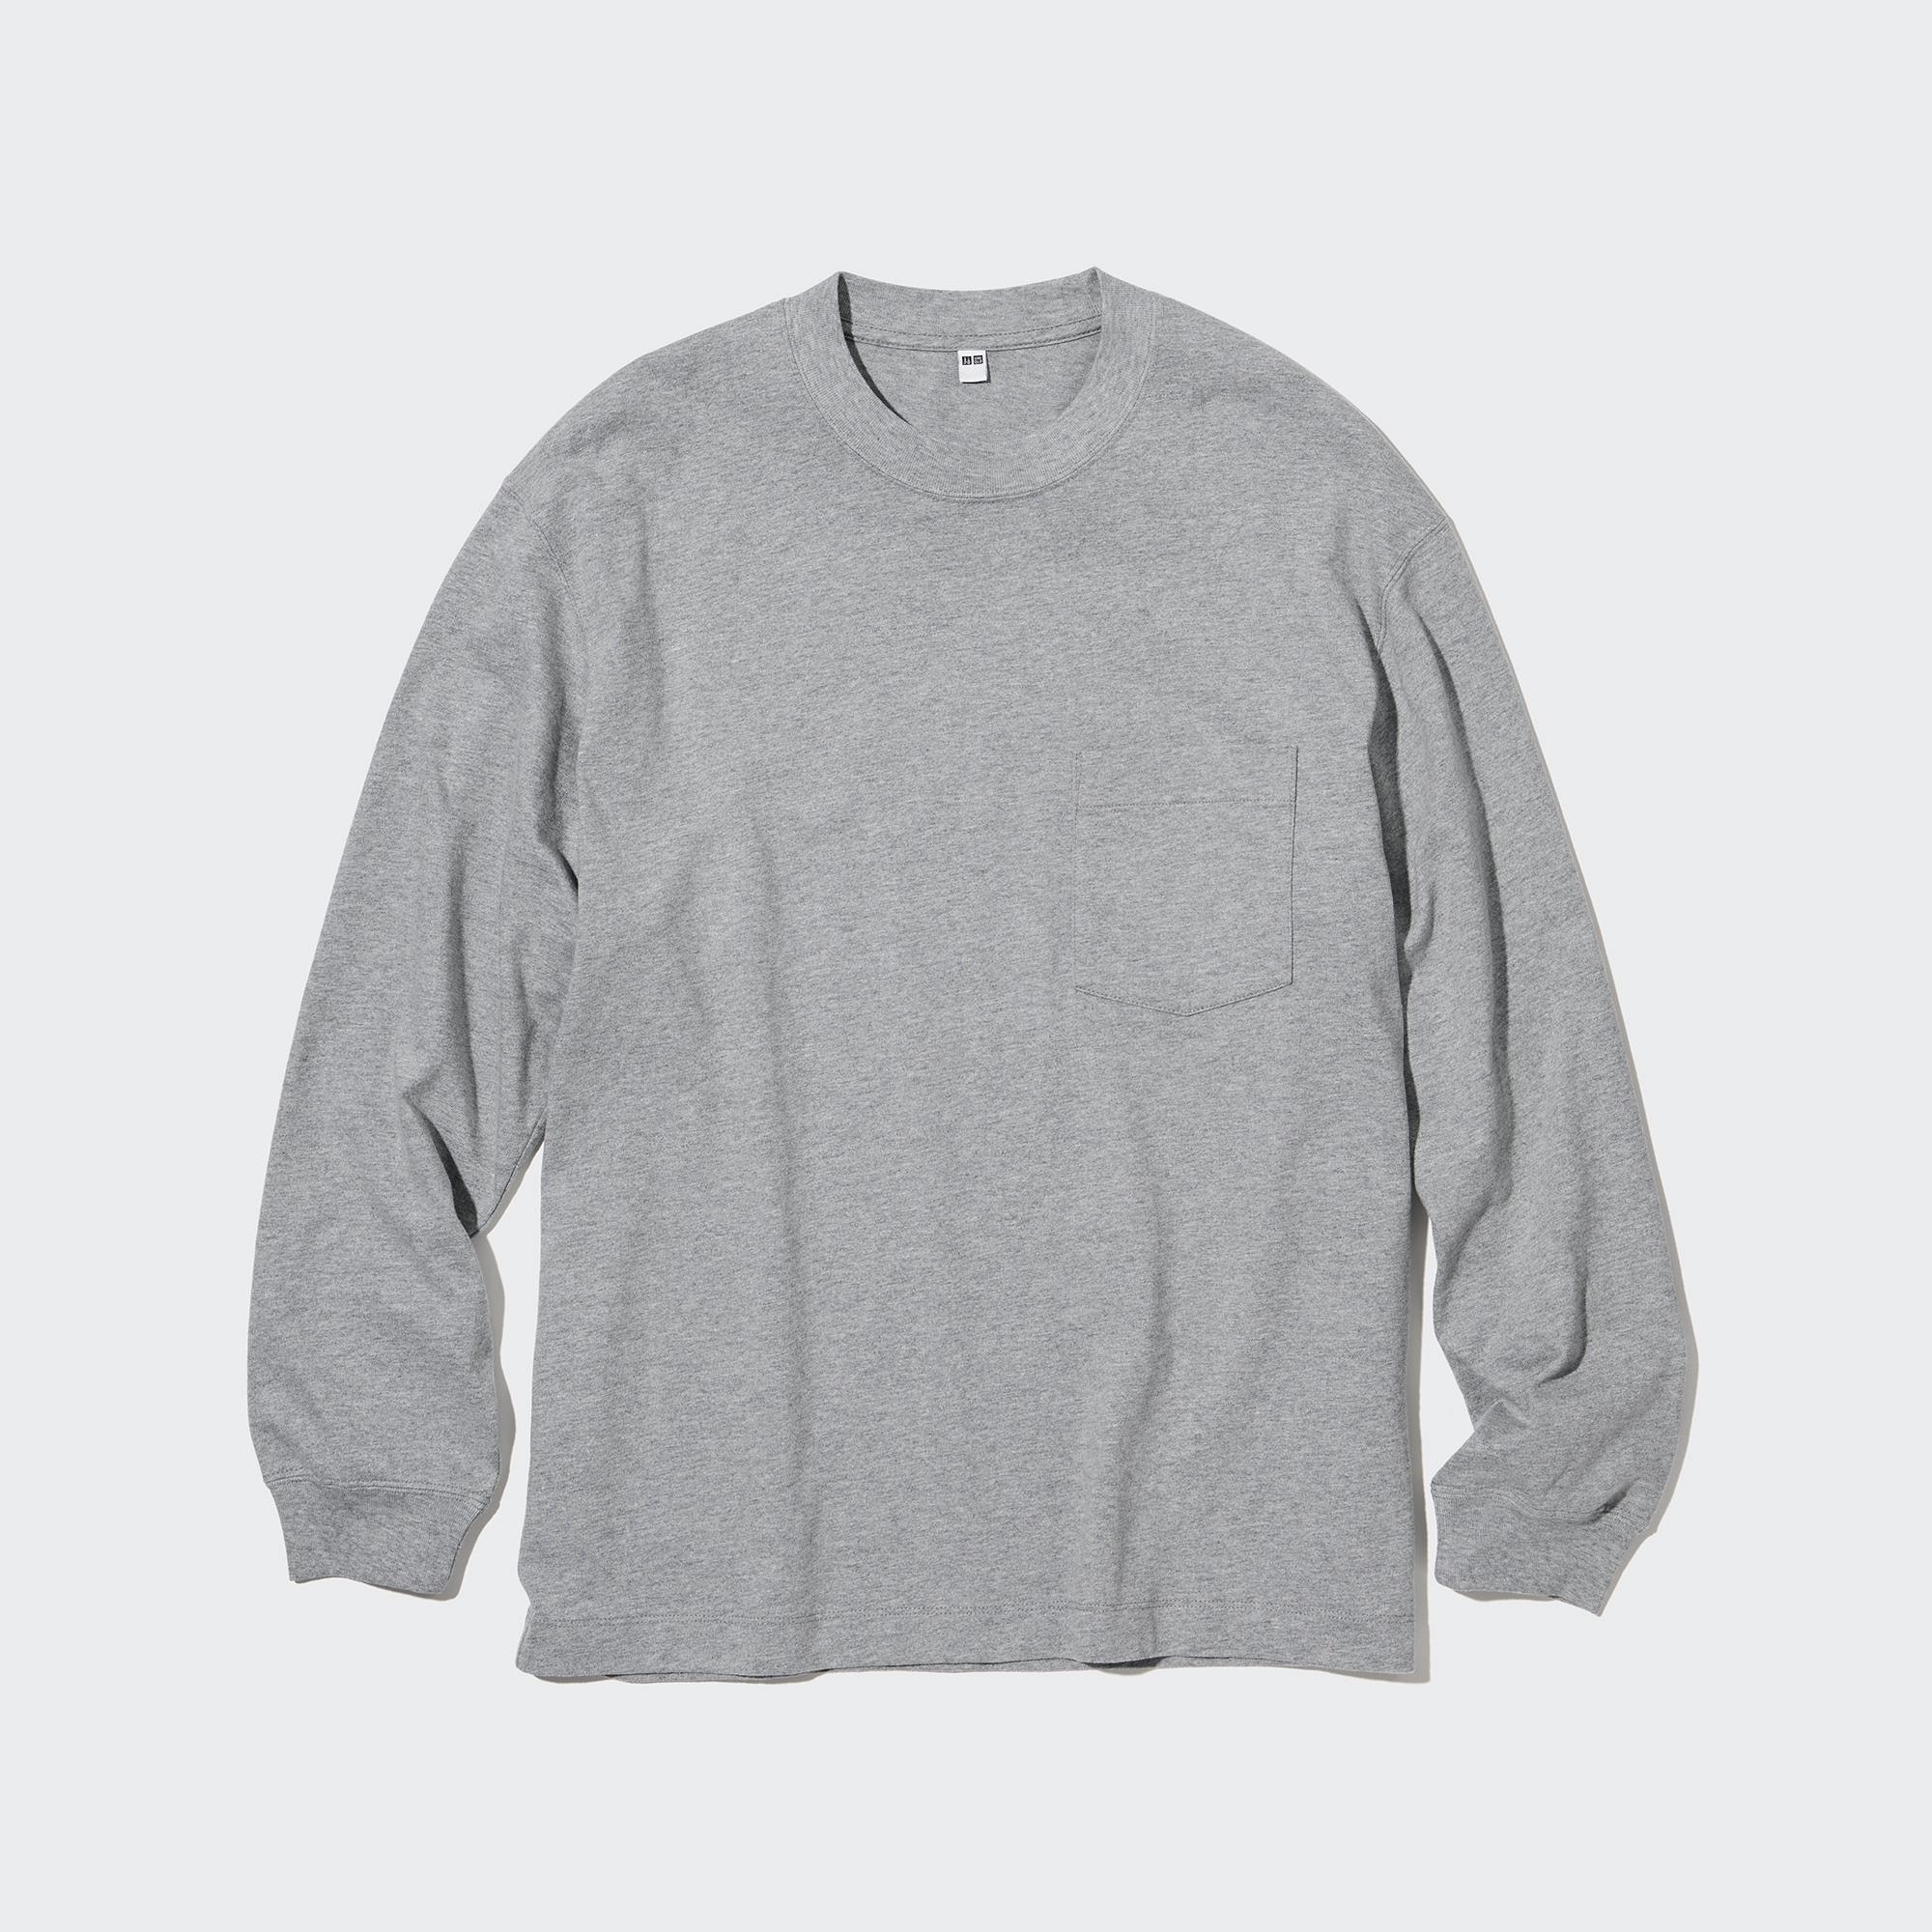 acrylic Men's Round Neck Full Sleeve Color Black Winter T Shirt -7915